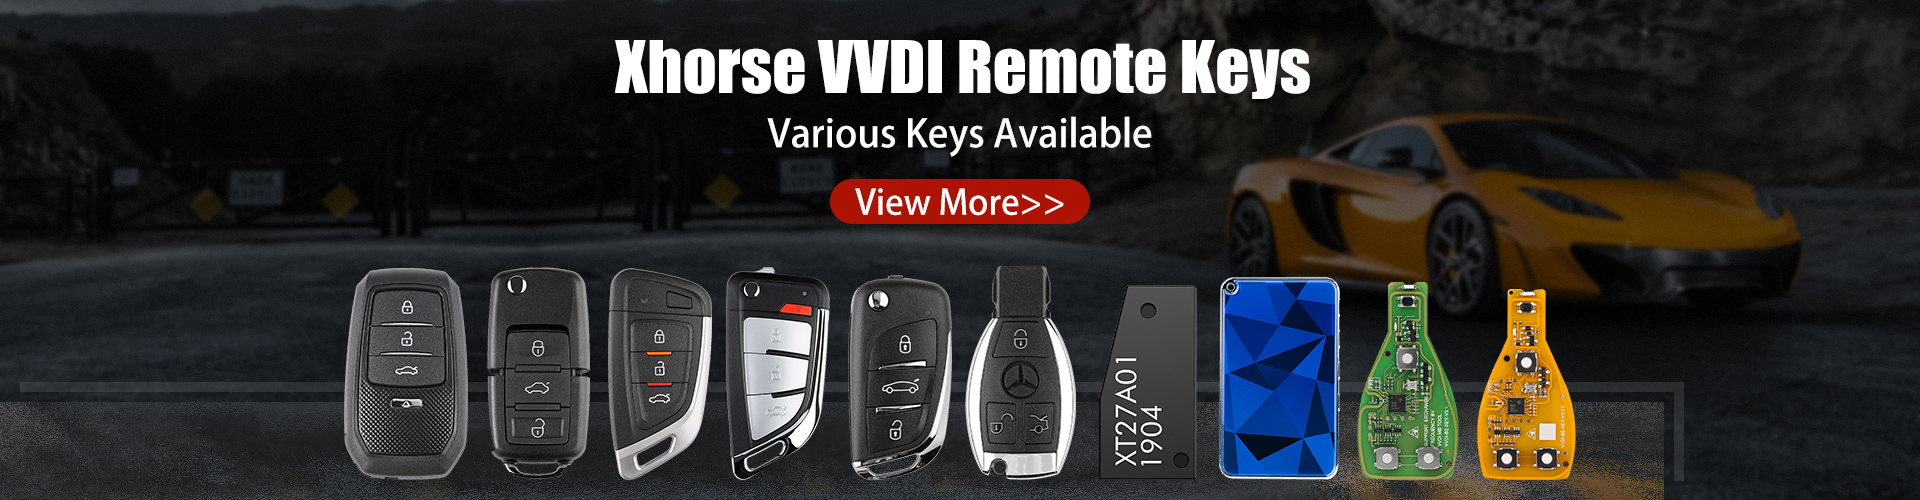 Xhorse VVDI Remote Keys